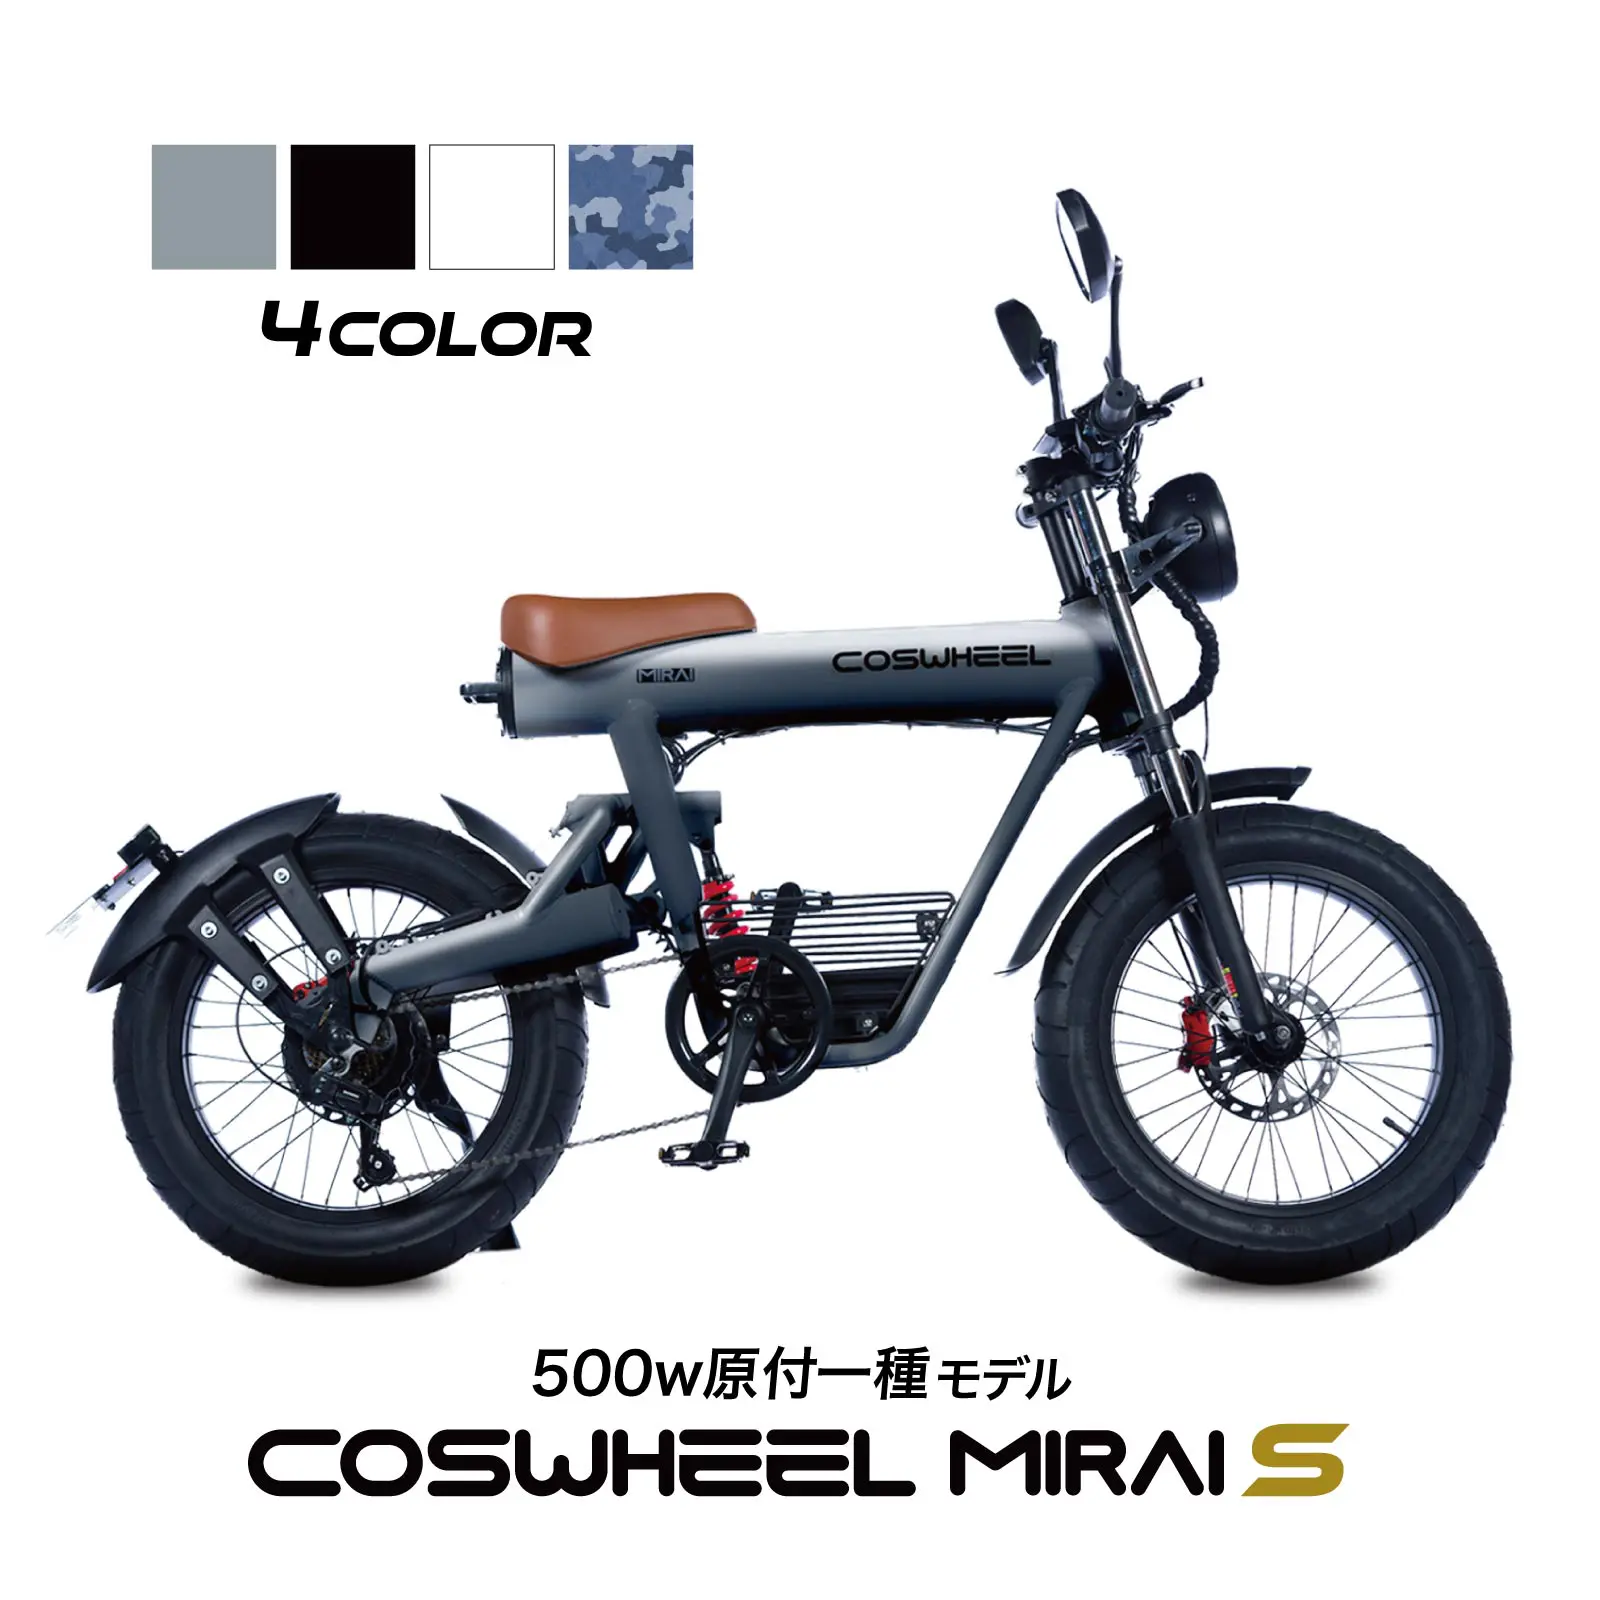 COSWHEEL MIRAI S 電動バイク 500w 原付一種 モデル / 公道走行可能 ...